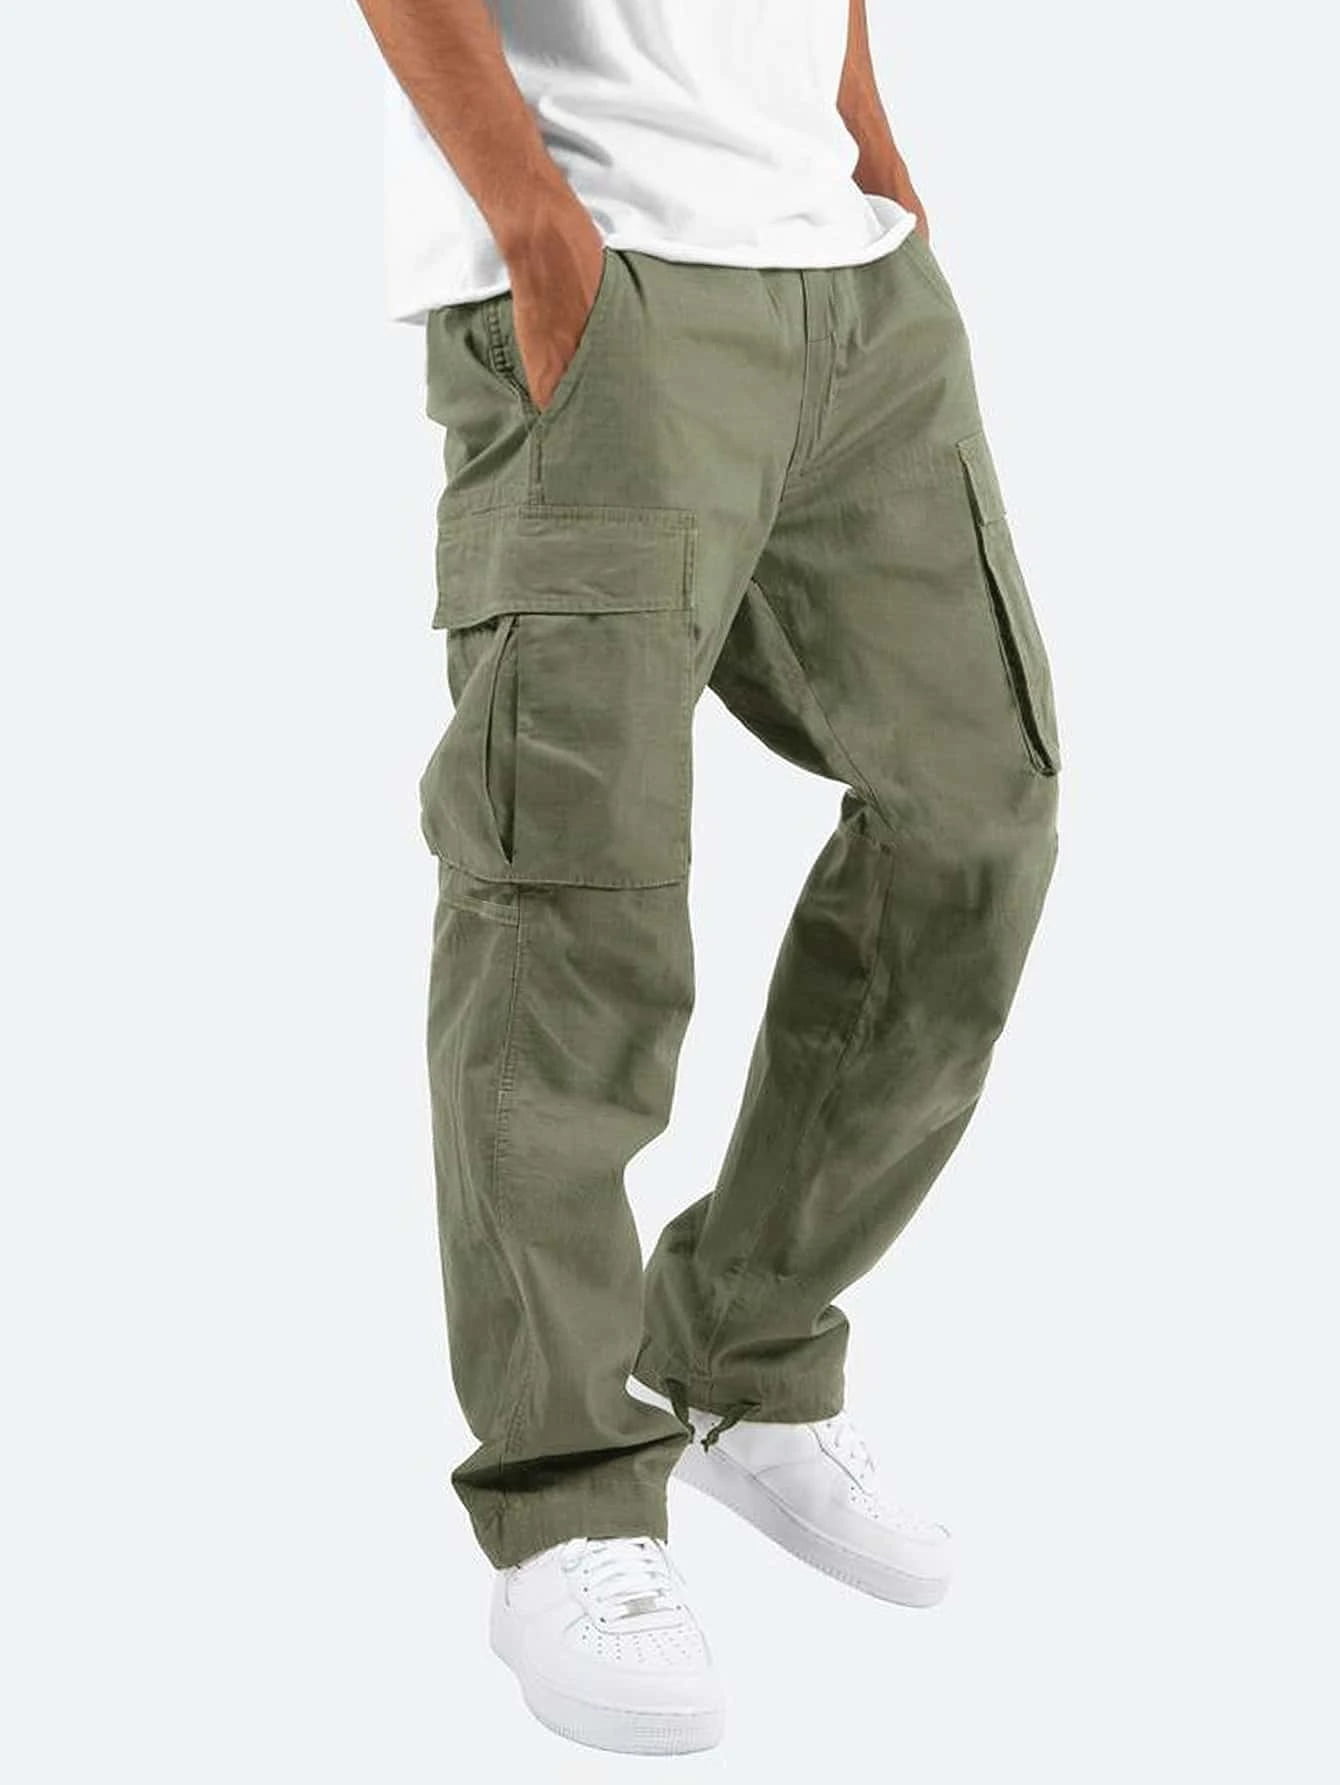 Men Comfy Workwear Cotton Linen-look Multi-pocket Casual Loose Baggy Long Cargo  Pants Trousers